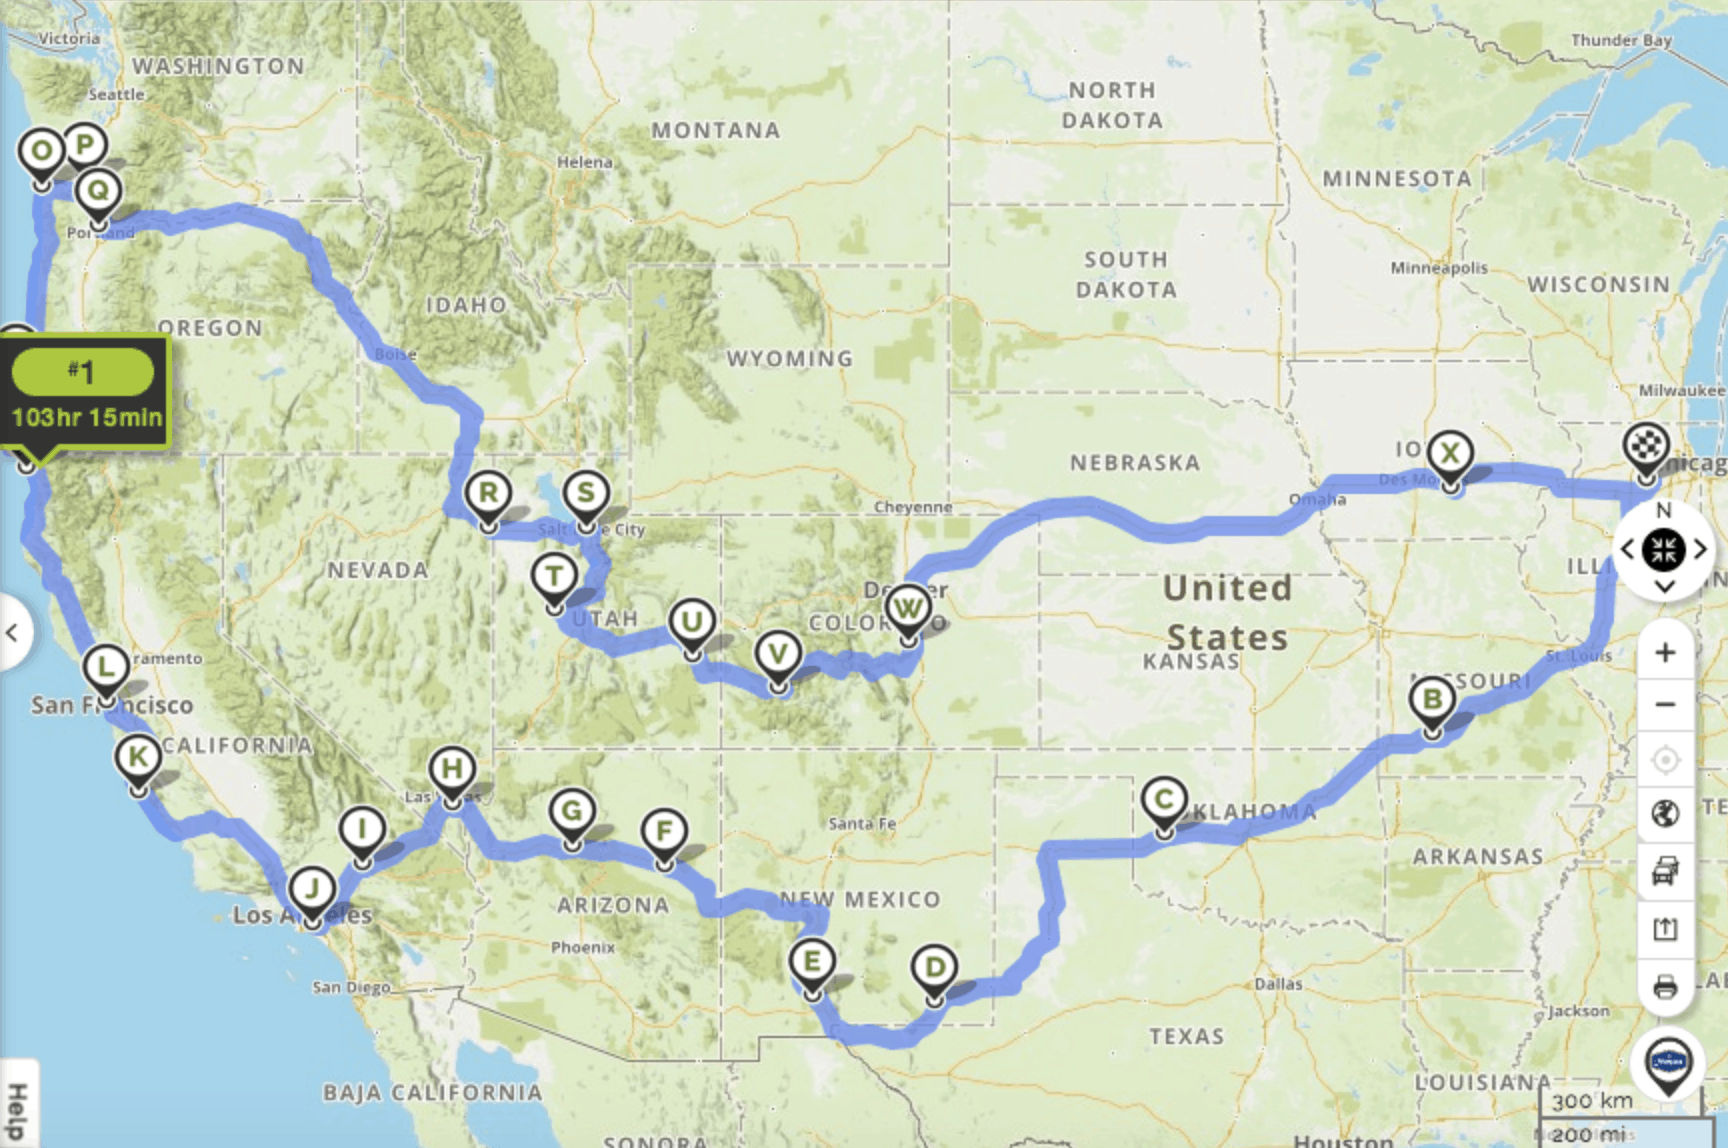 road trip plan map